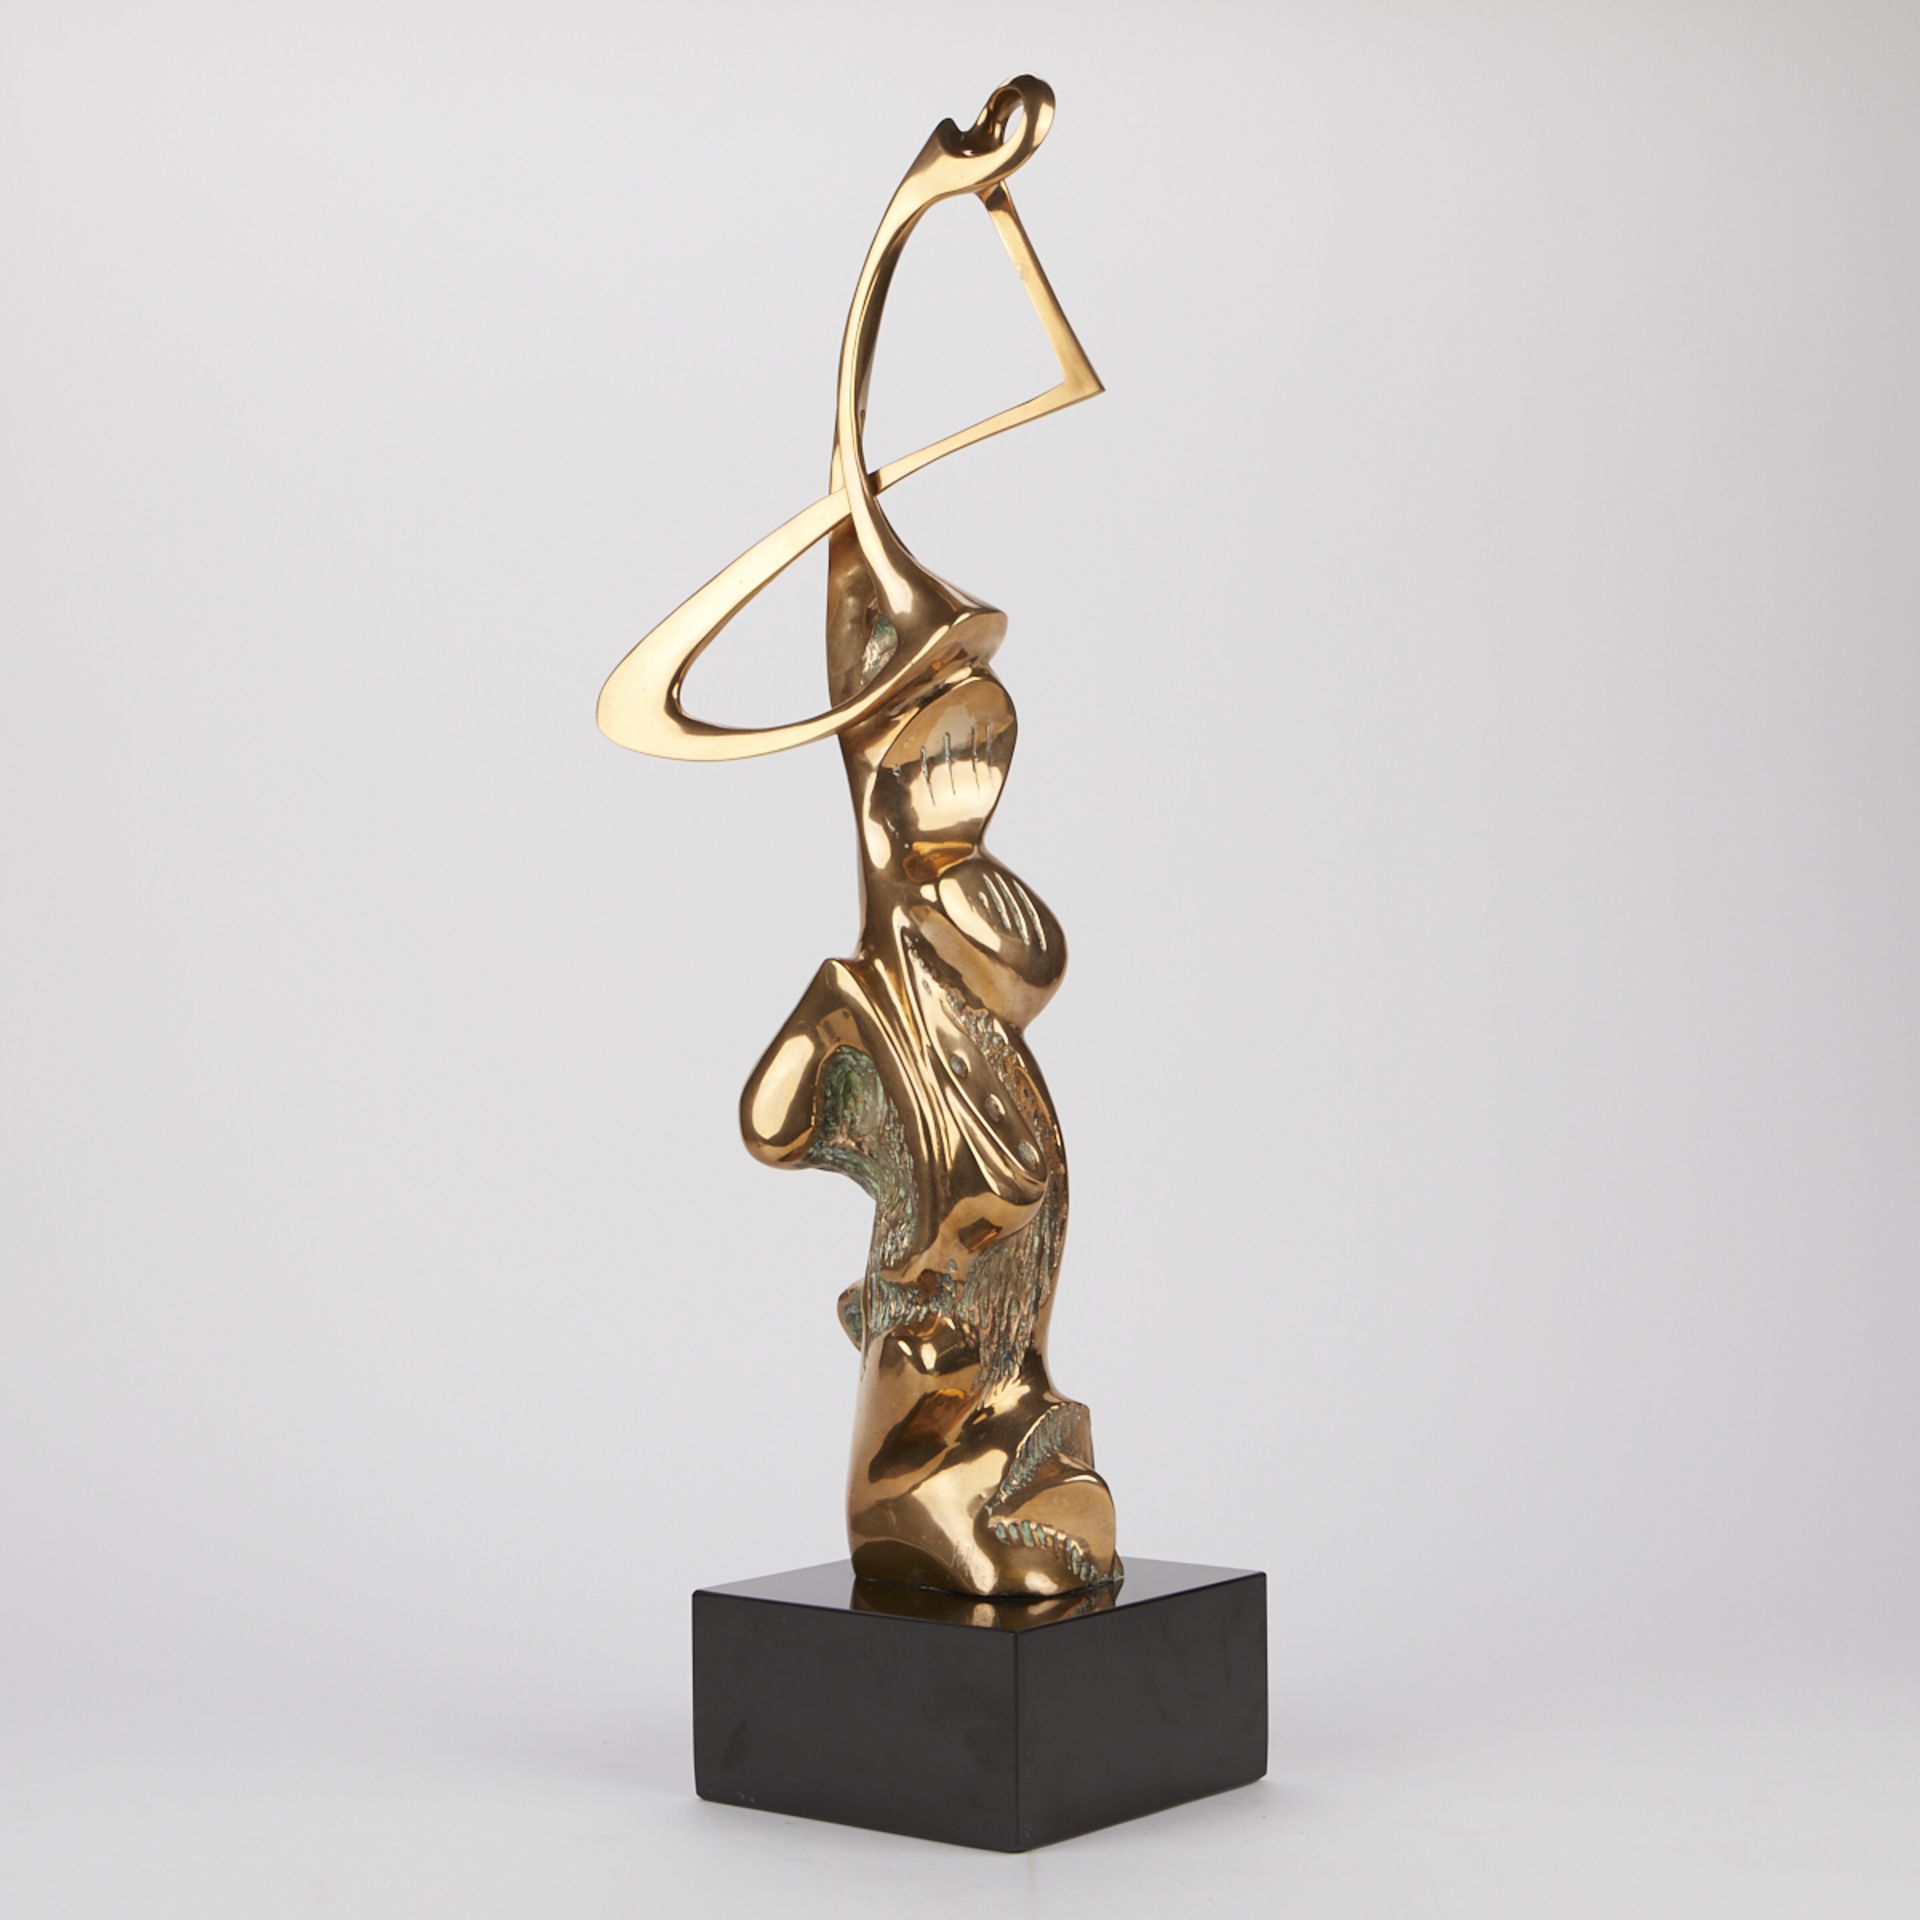 Antonio Grediaga Kieff Bronze Sculpture